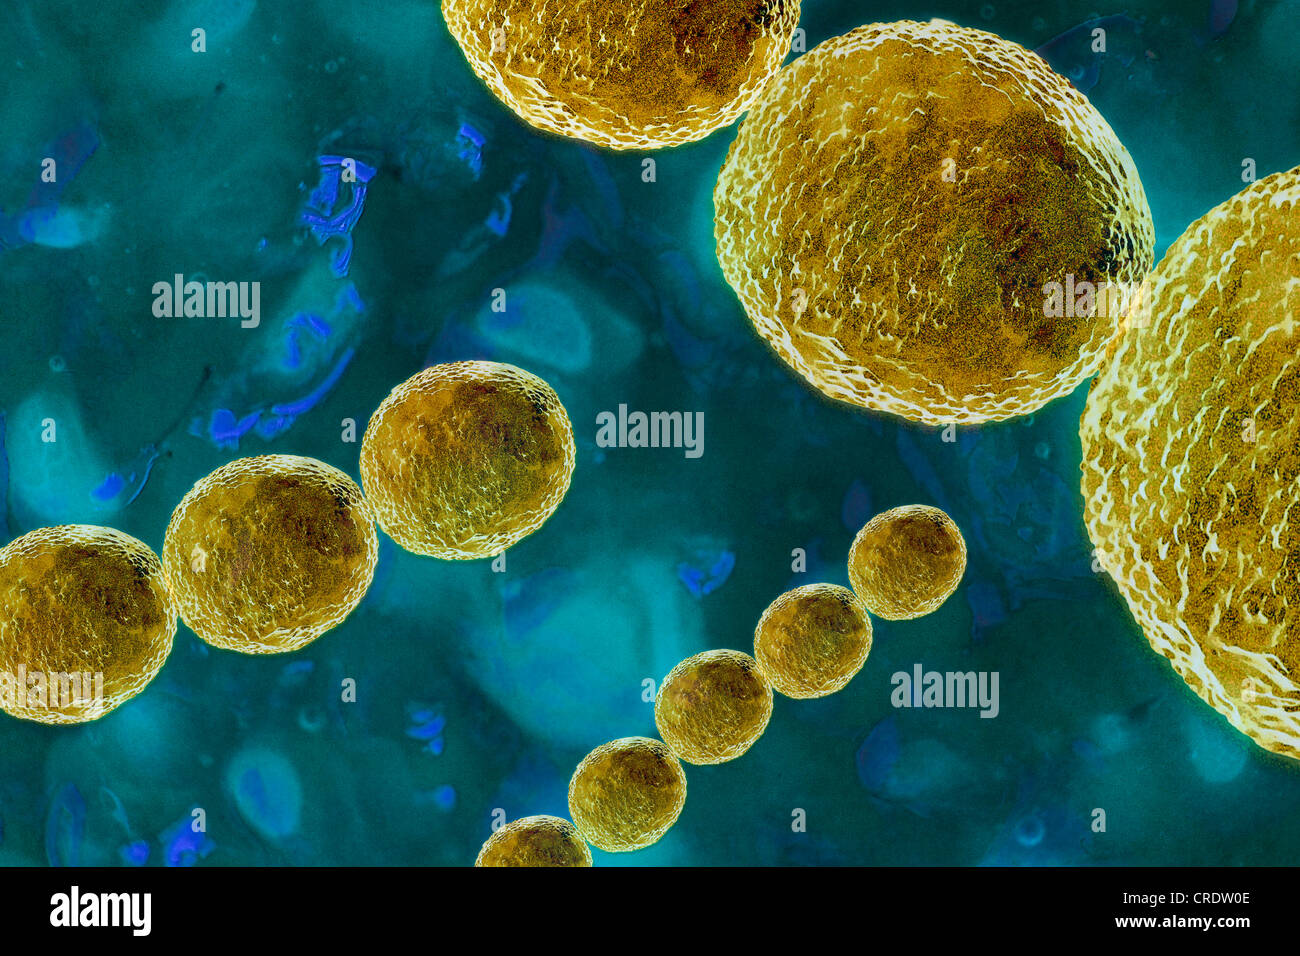 Streptococcus bacteria, a dangerous pathogen, illustration Stock Photo